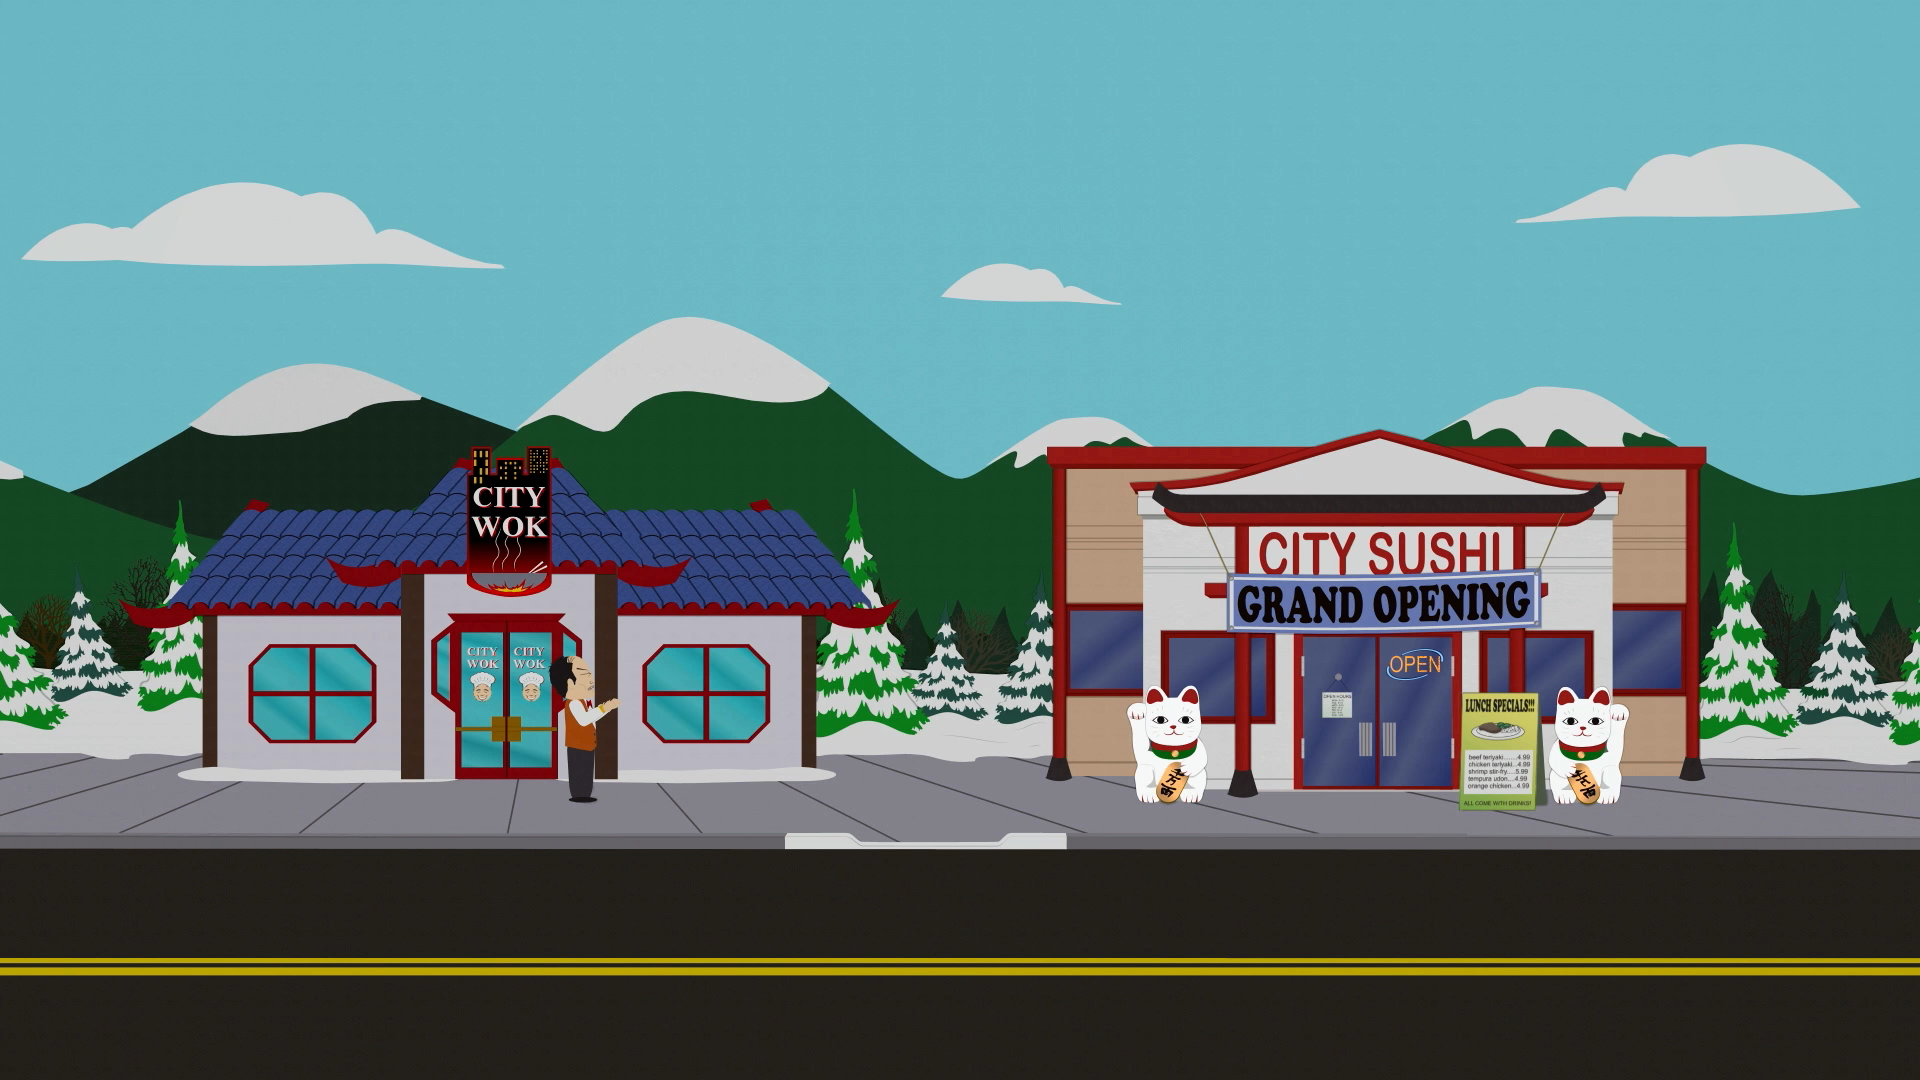 City wok vs city sushi